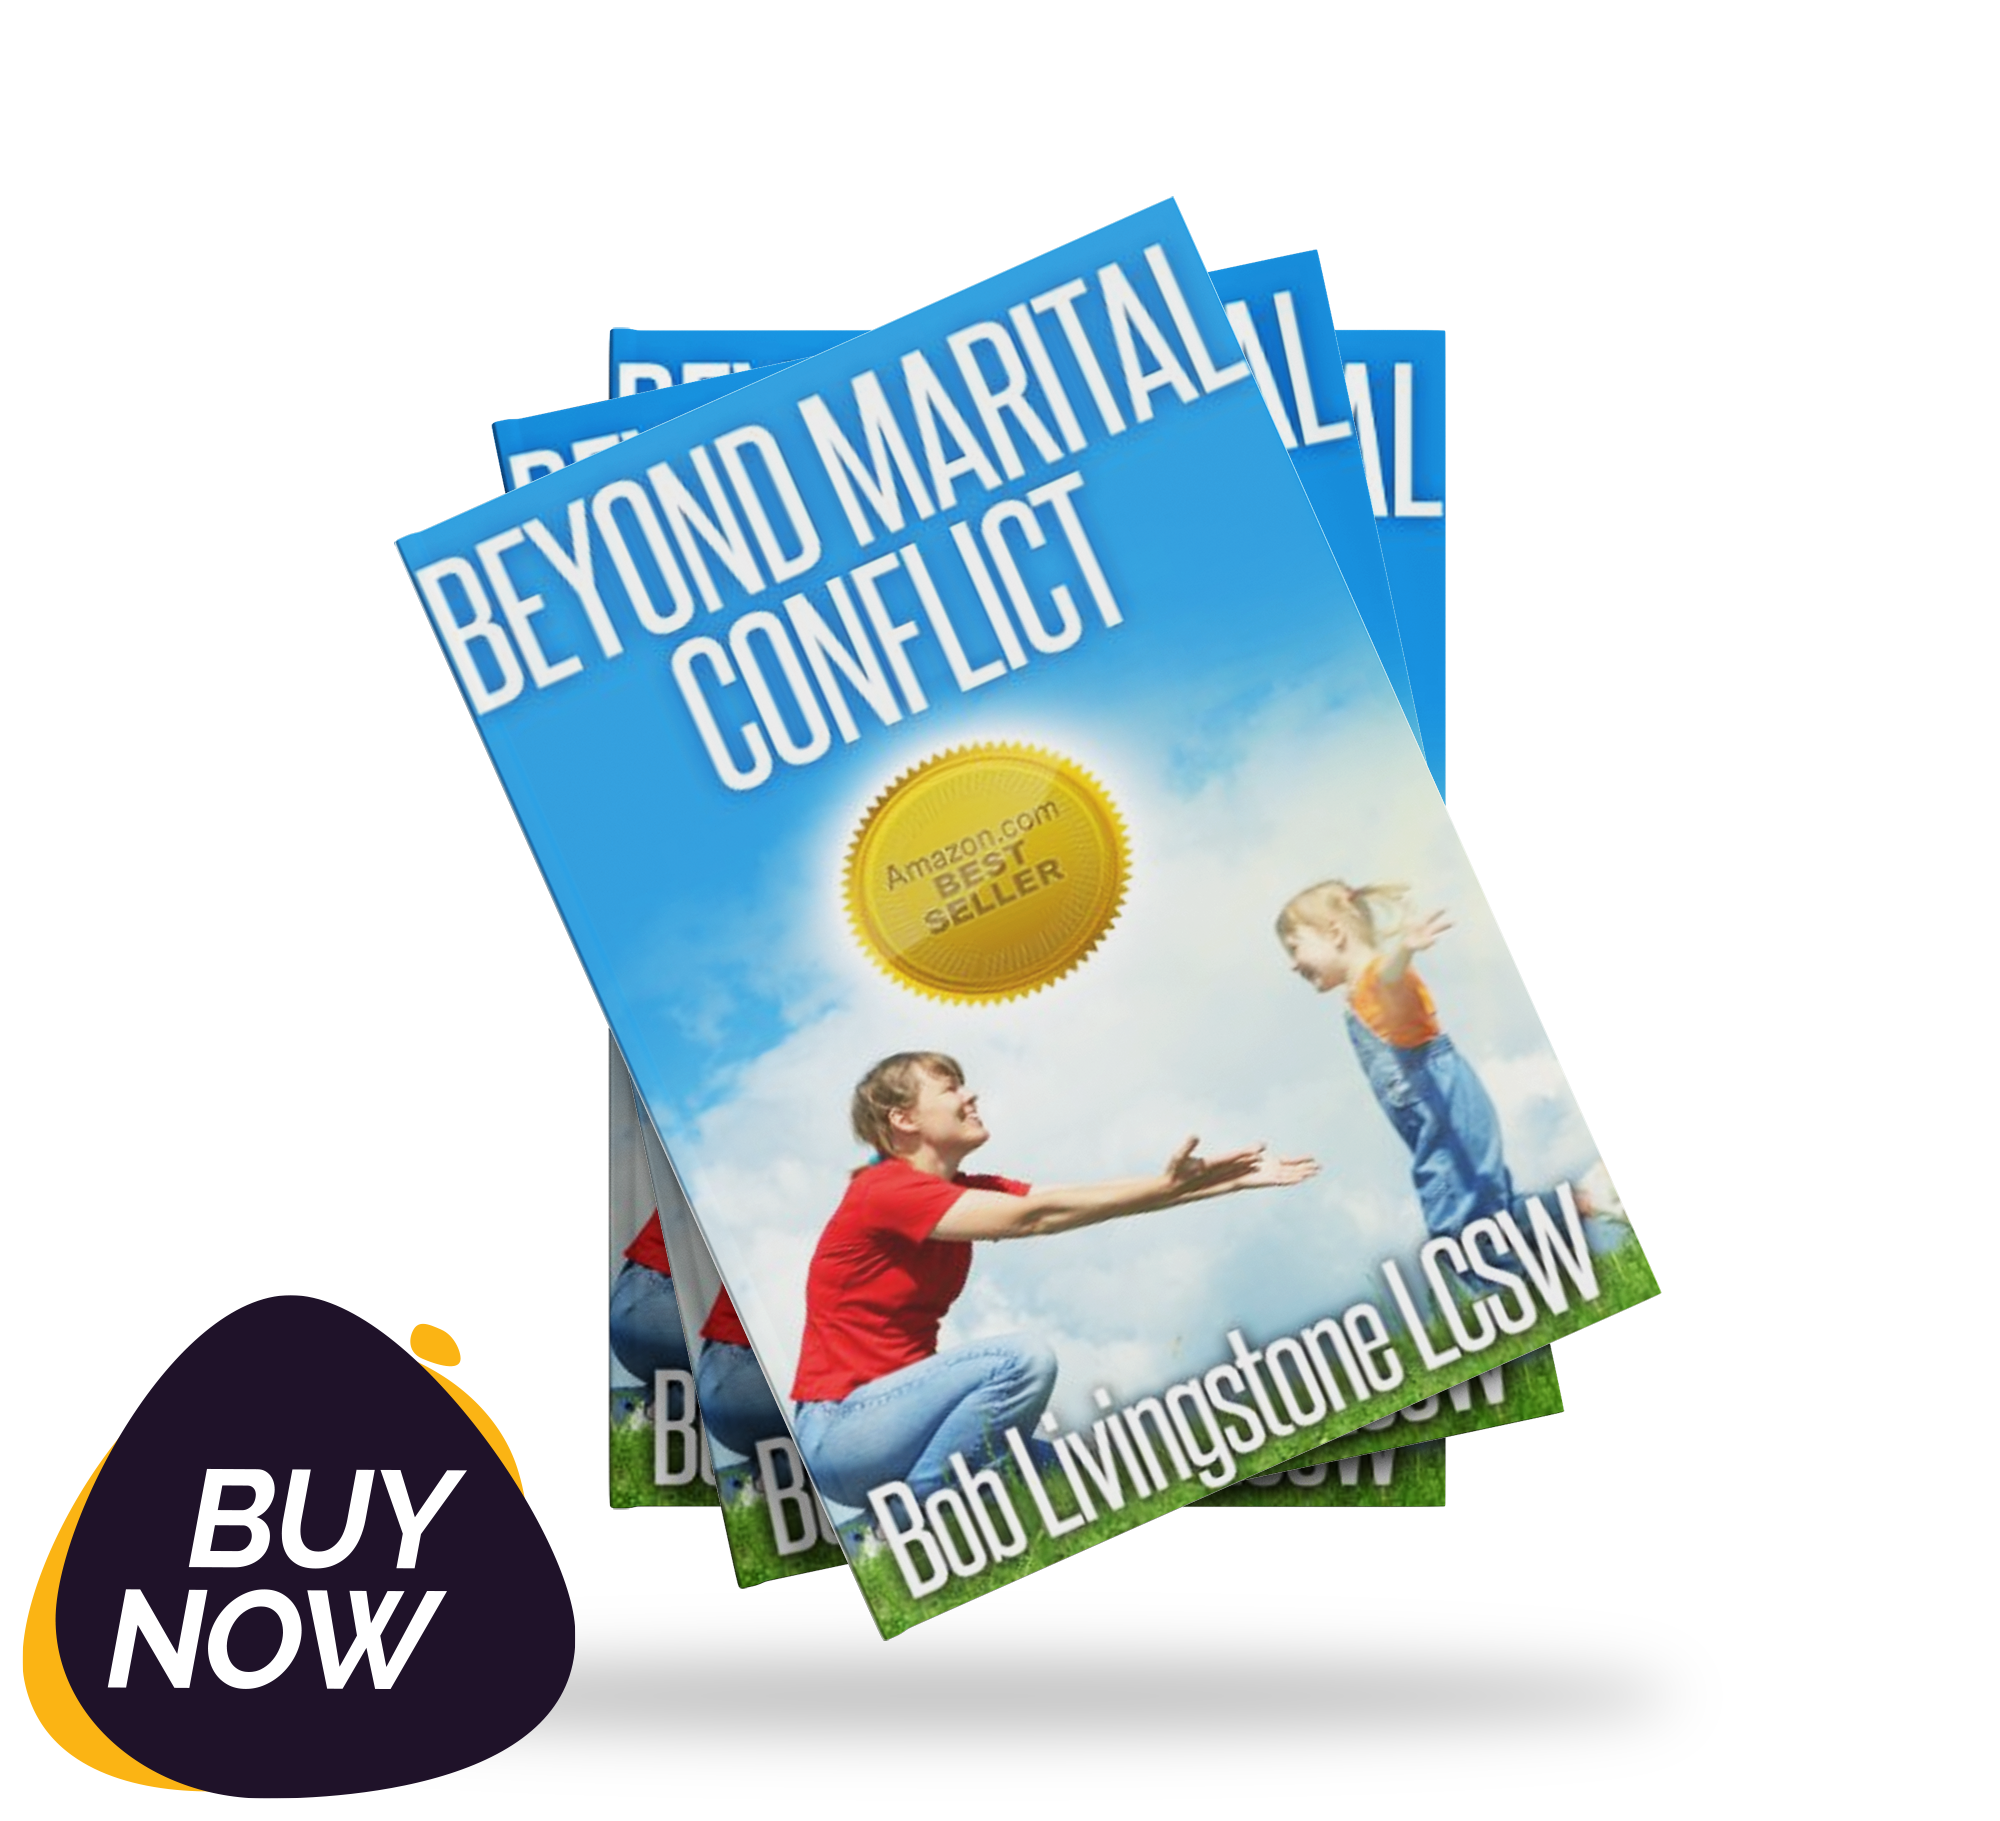 Beyond Marital Conflict